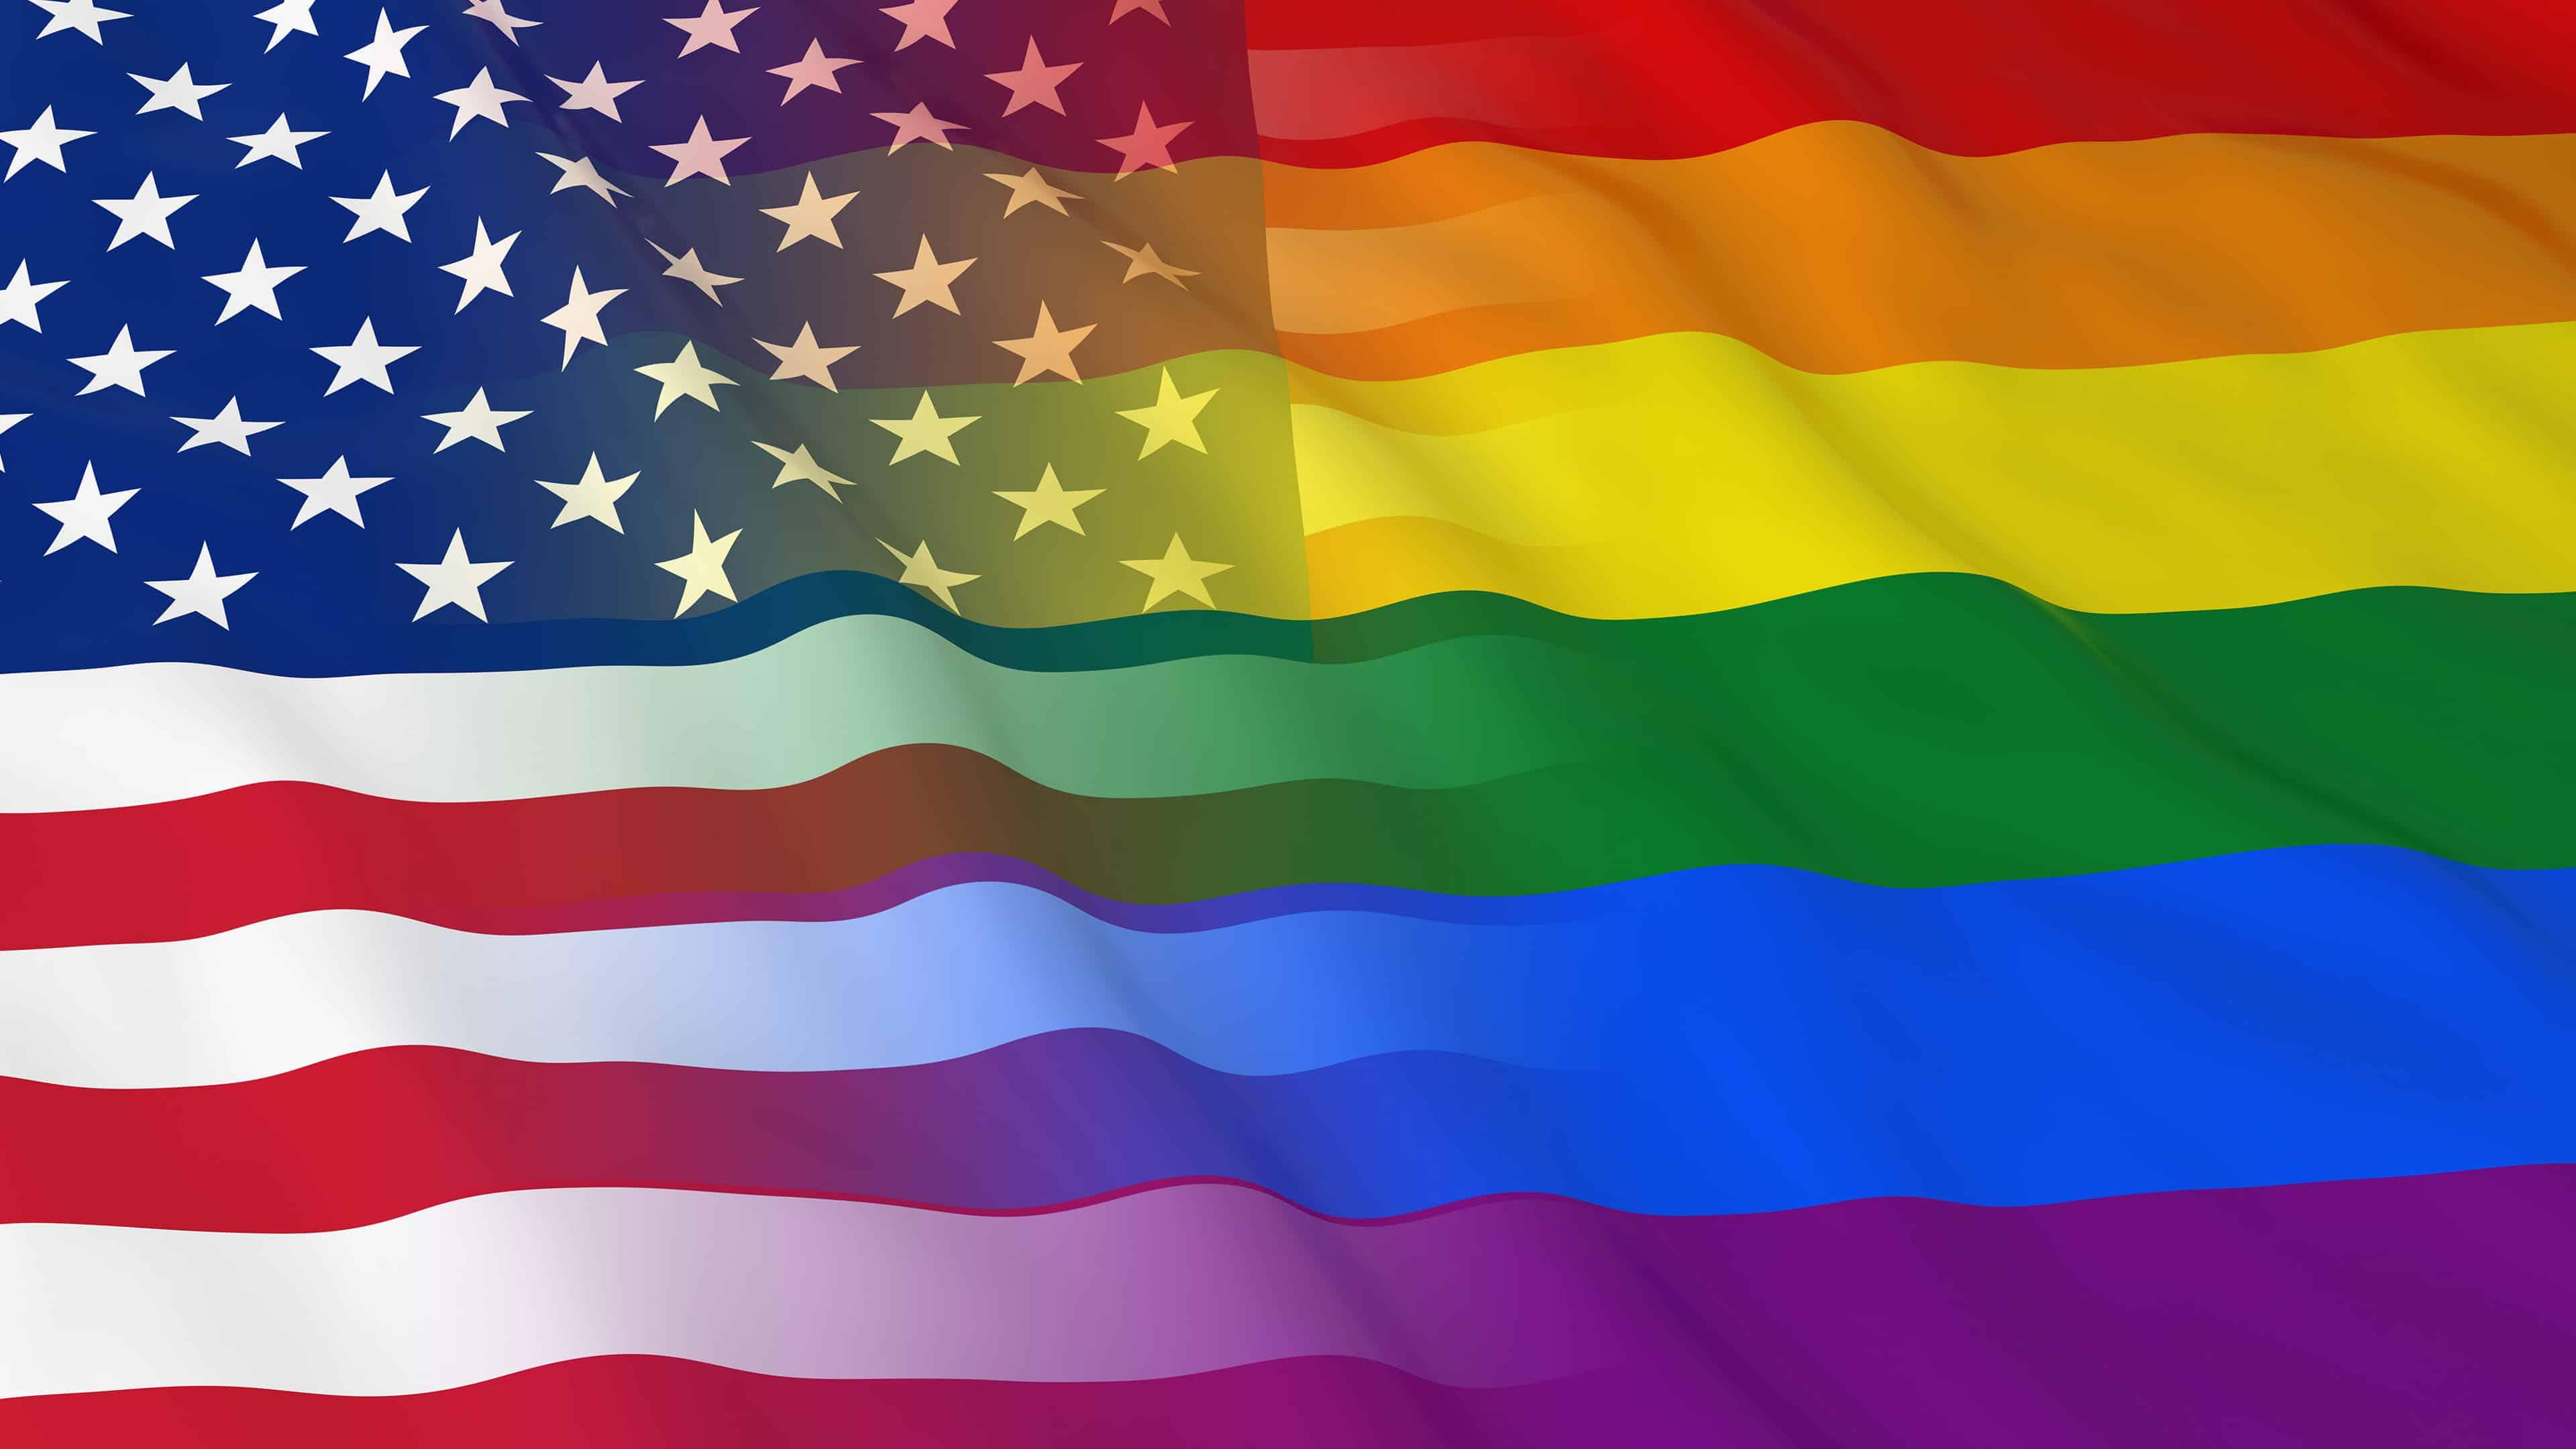 3840 x 2160 · jpeg - American And LGBT Flag UHD 4K Wallpaper - Pixelz.cc